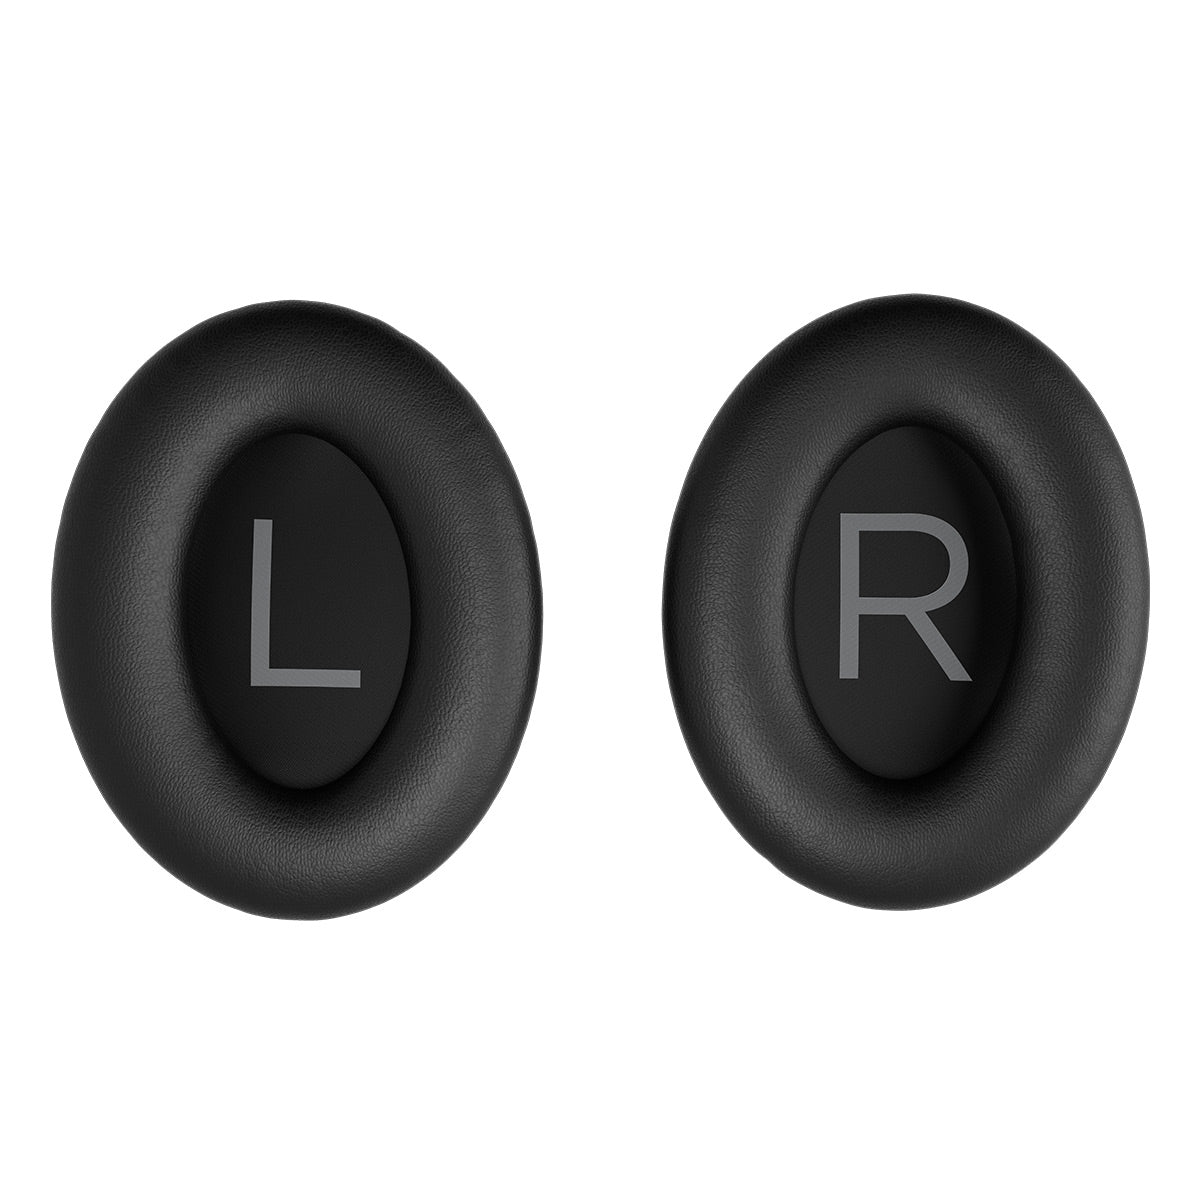 Bose QuietComfort 45 Wireless Noise Canceling Headphones (Black)